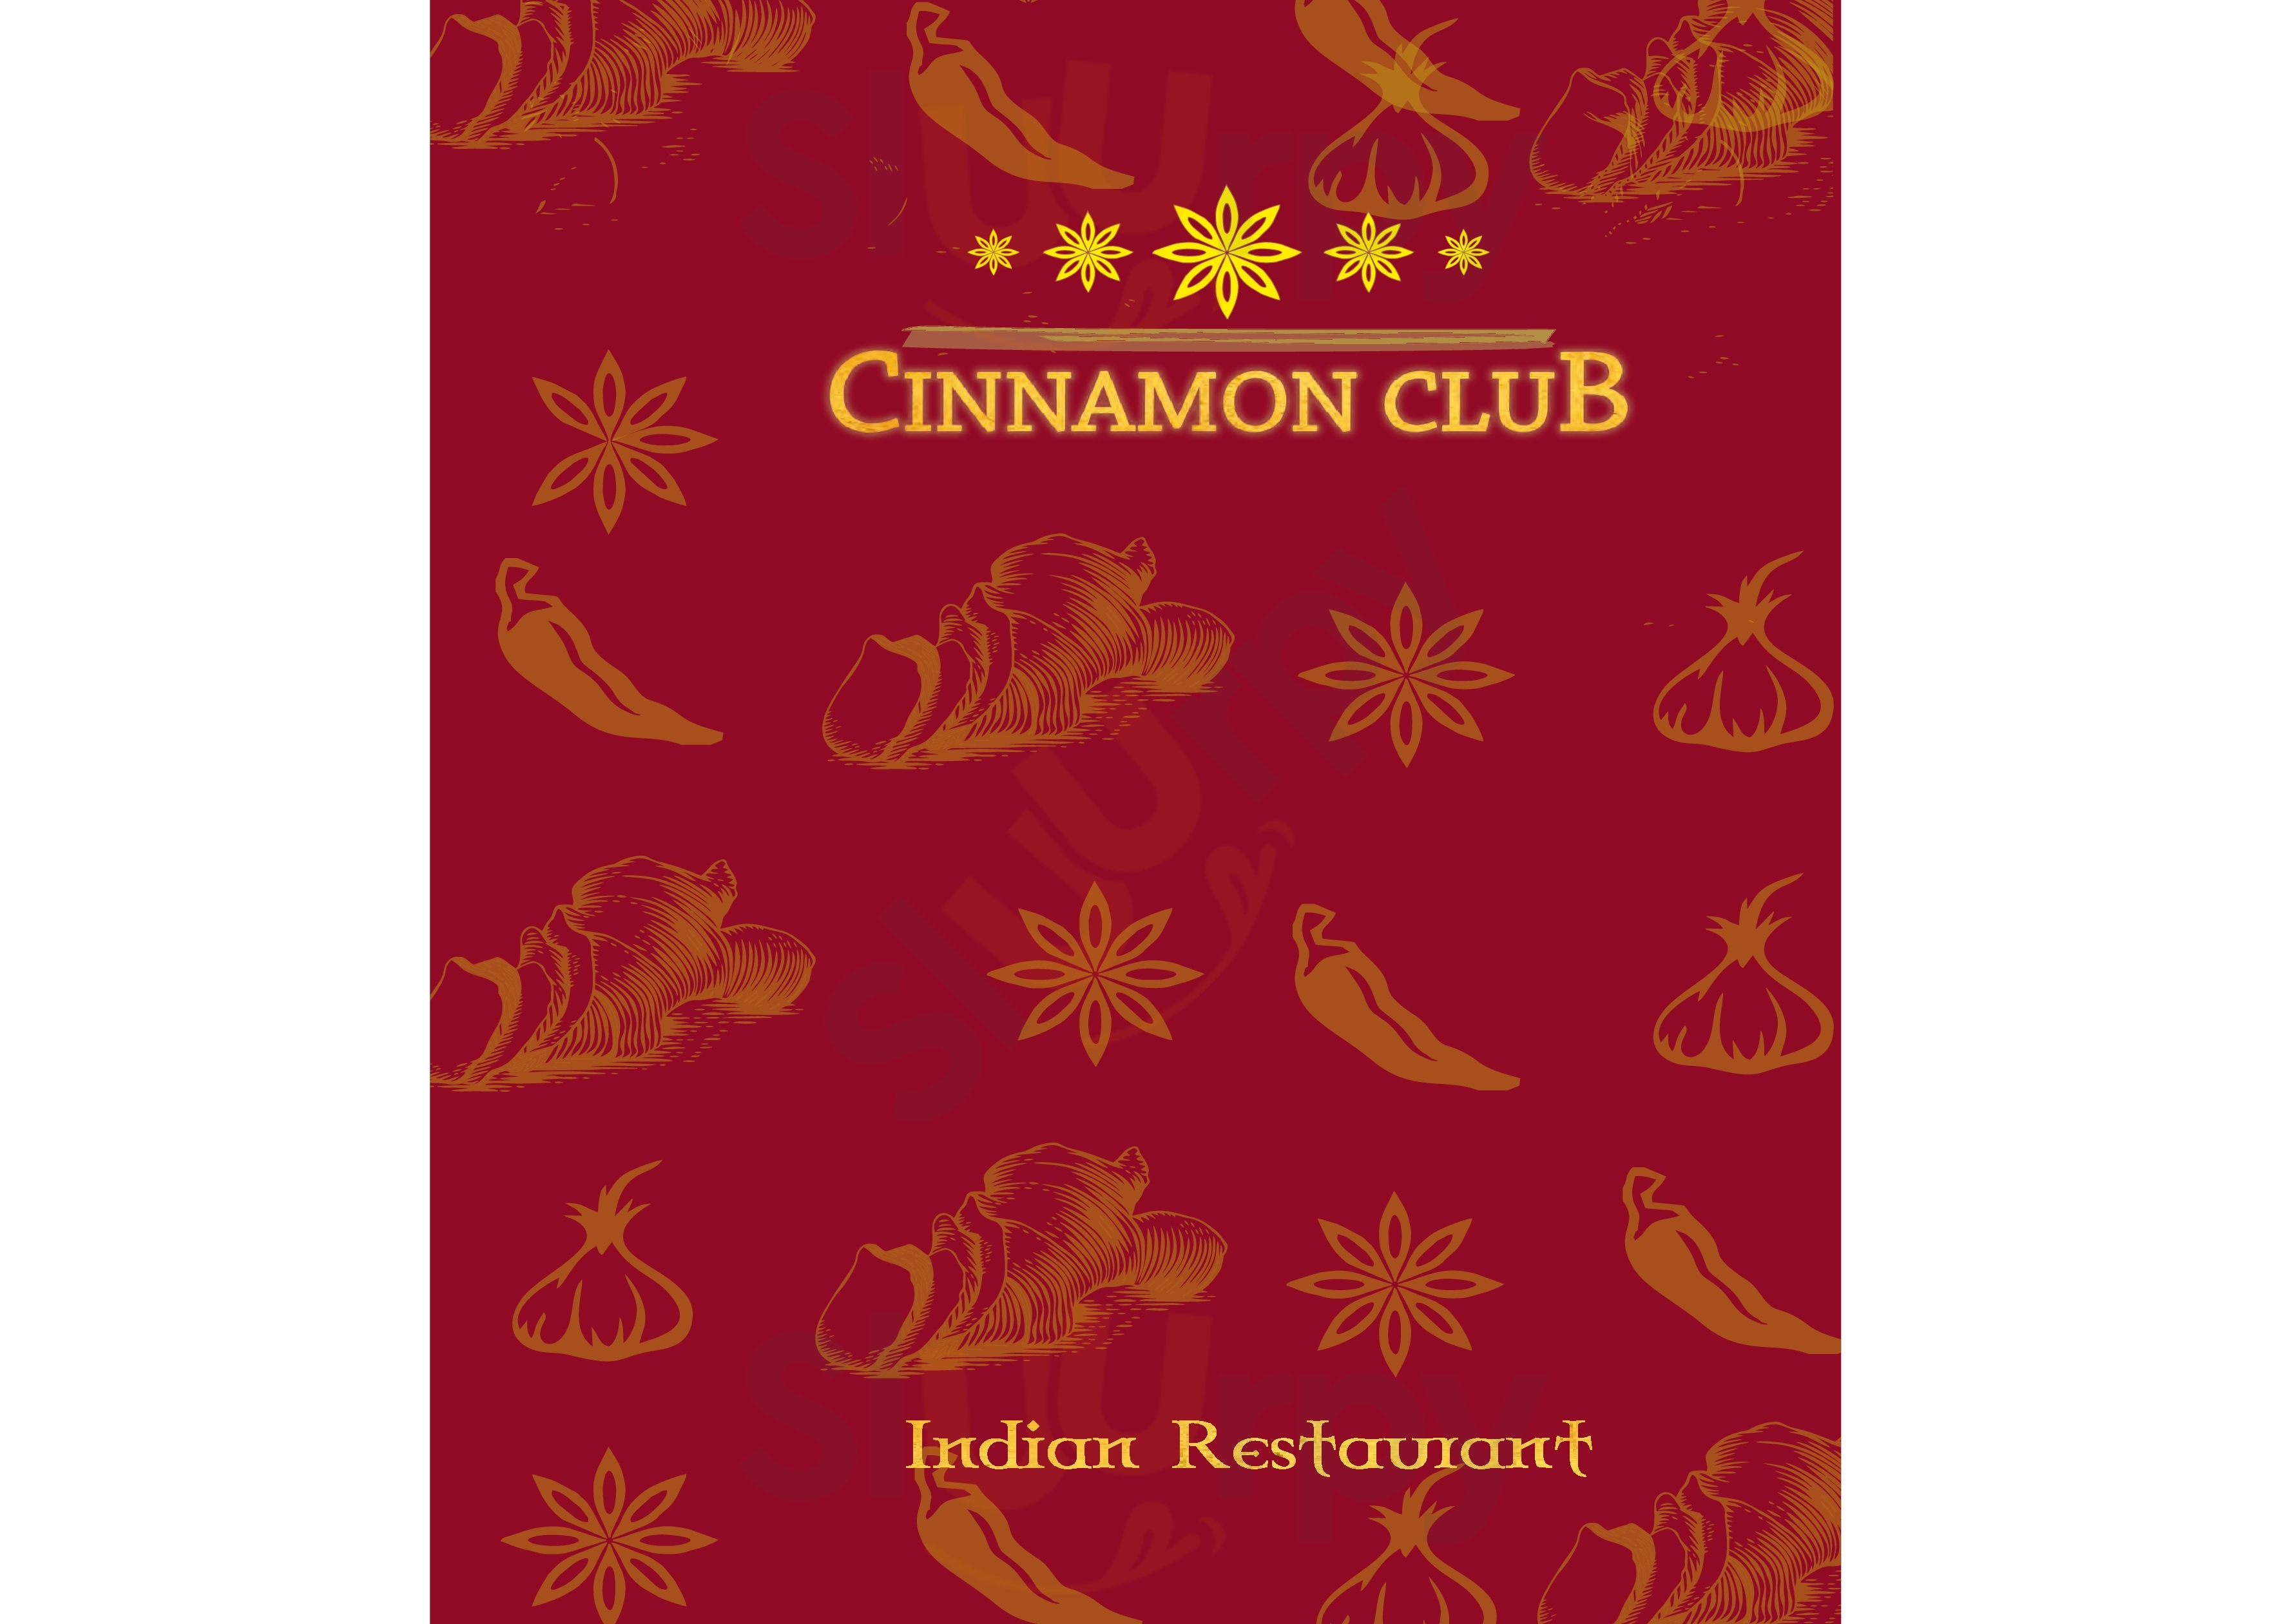 Cinnamon Club Benalmádena Menu - 1